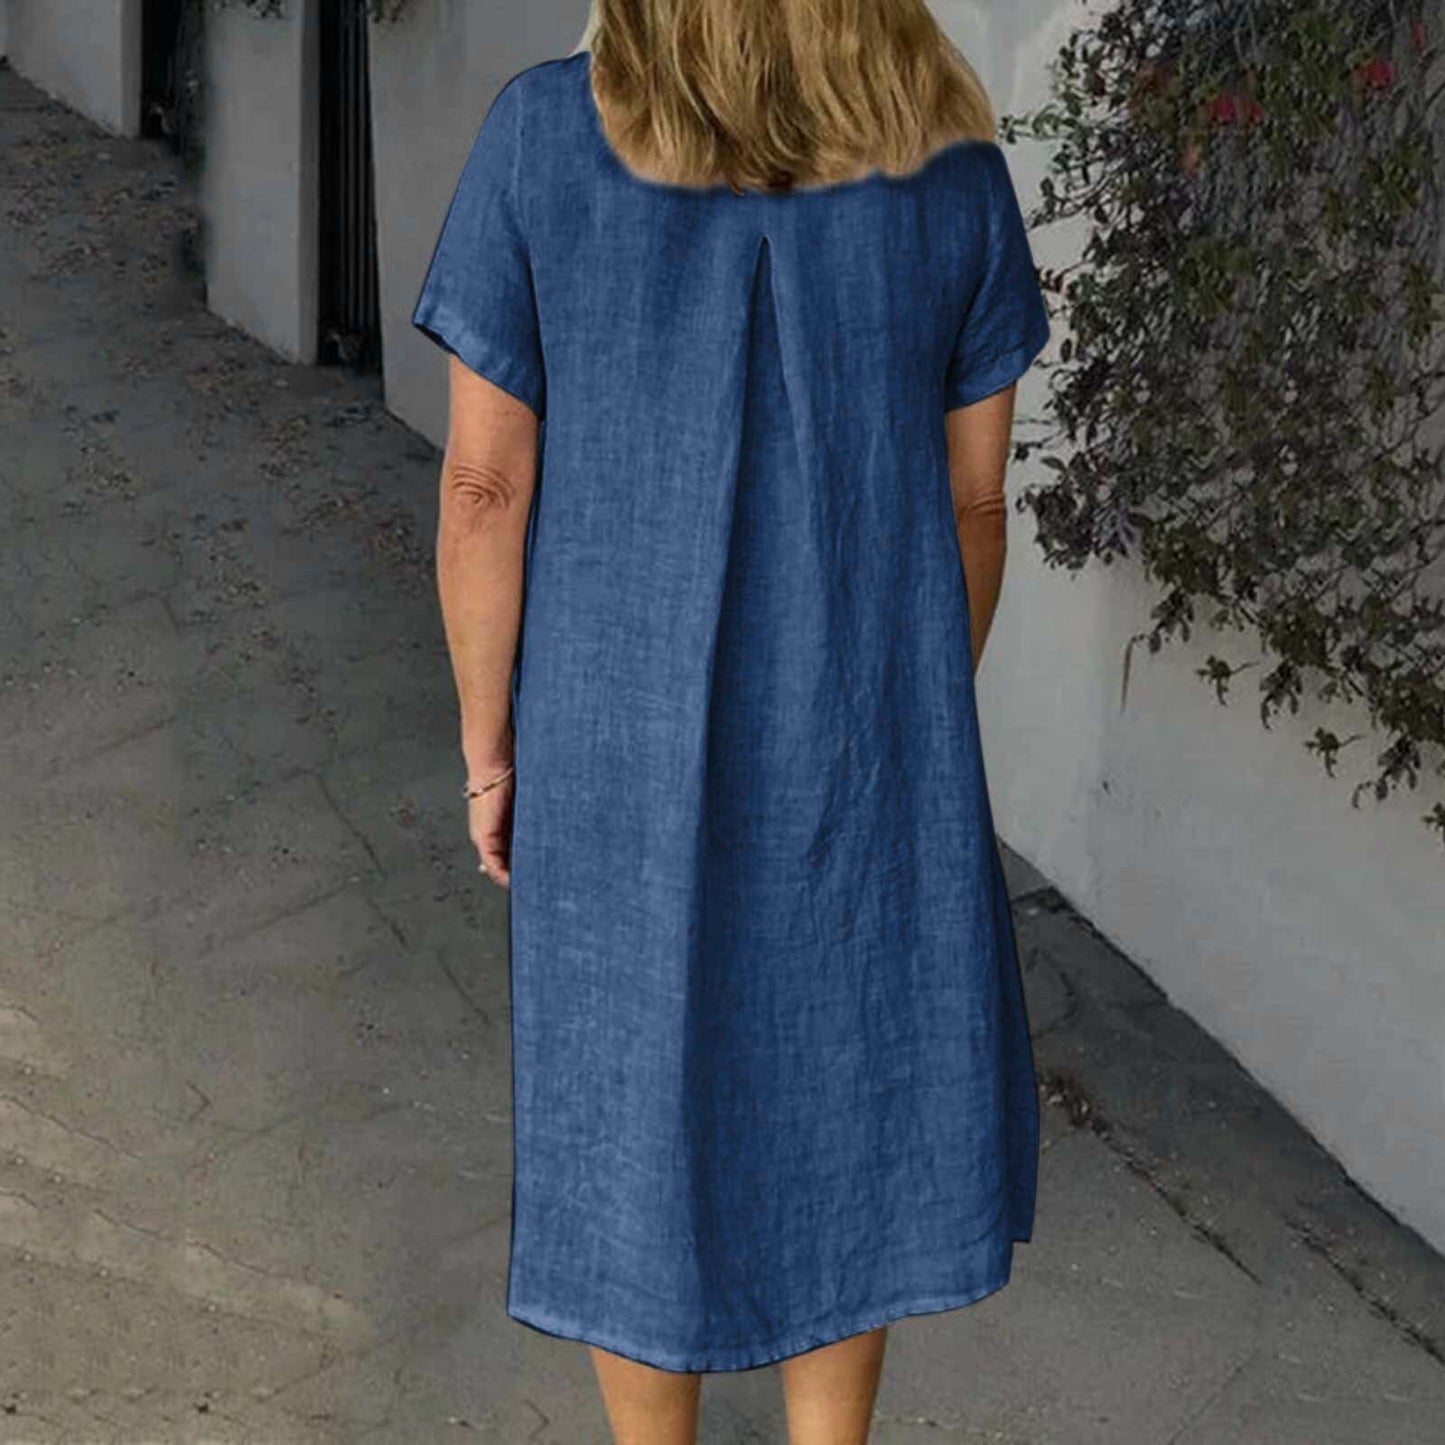 Street Minimalist Style Women'S Dress Casual Daily Wear Soild Color O-Neck Pockets Maxi Dress Loose Short Sleeve Linen Dresses